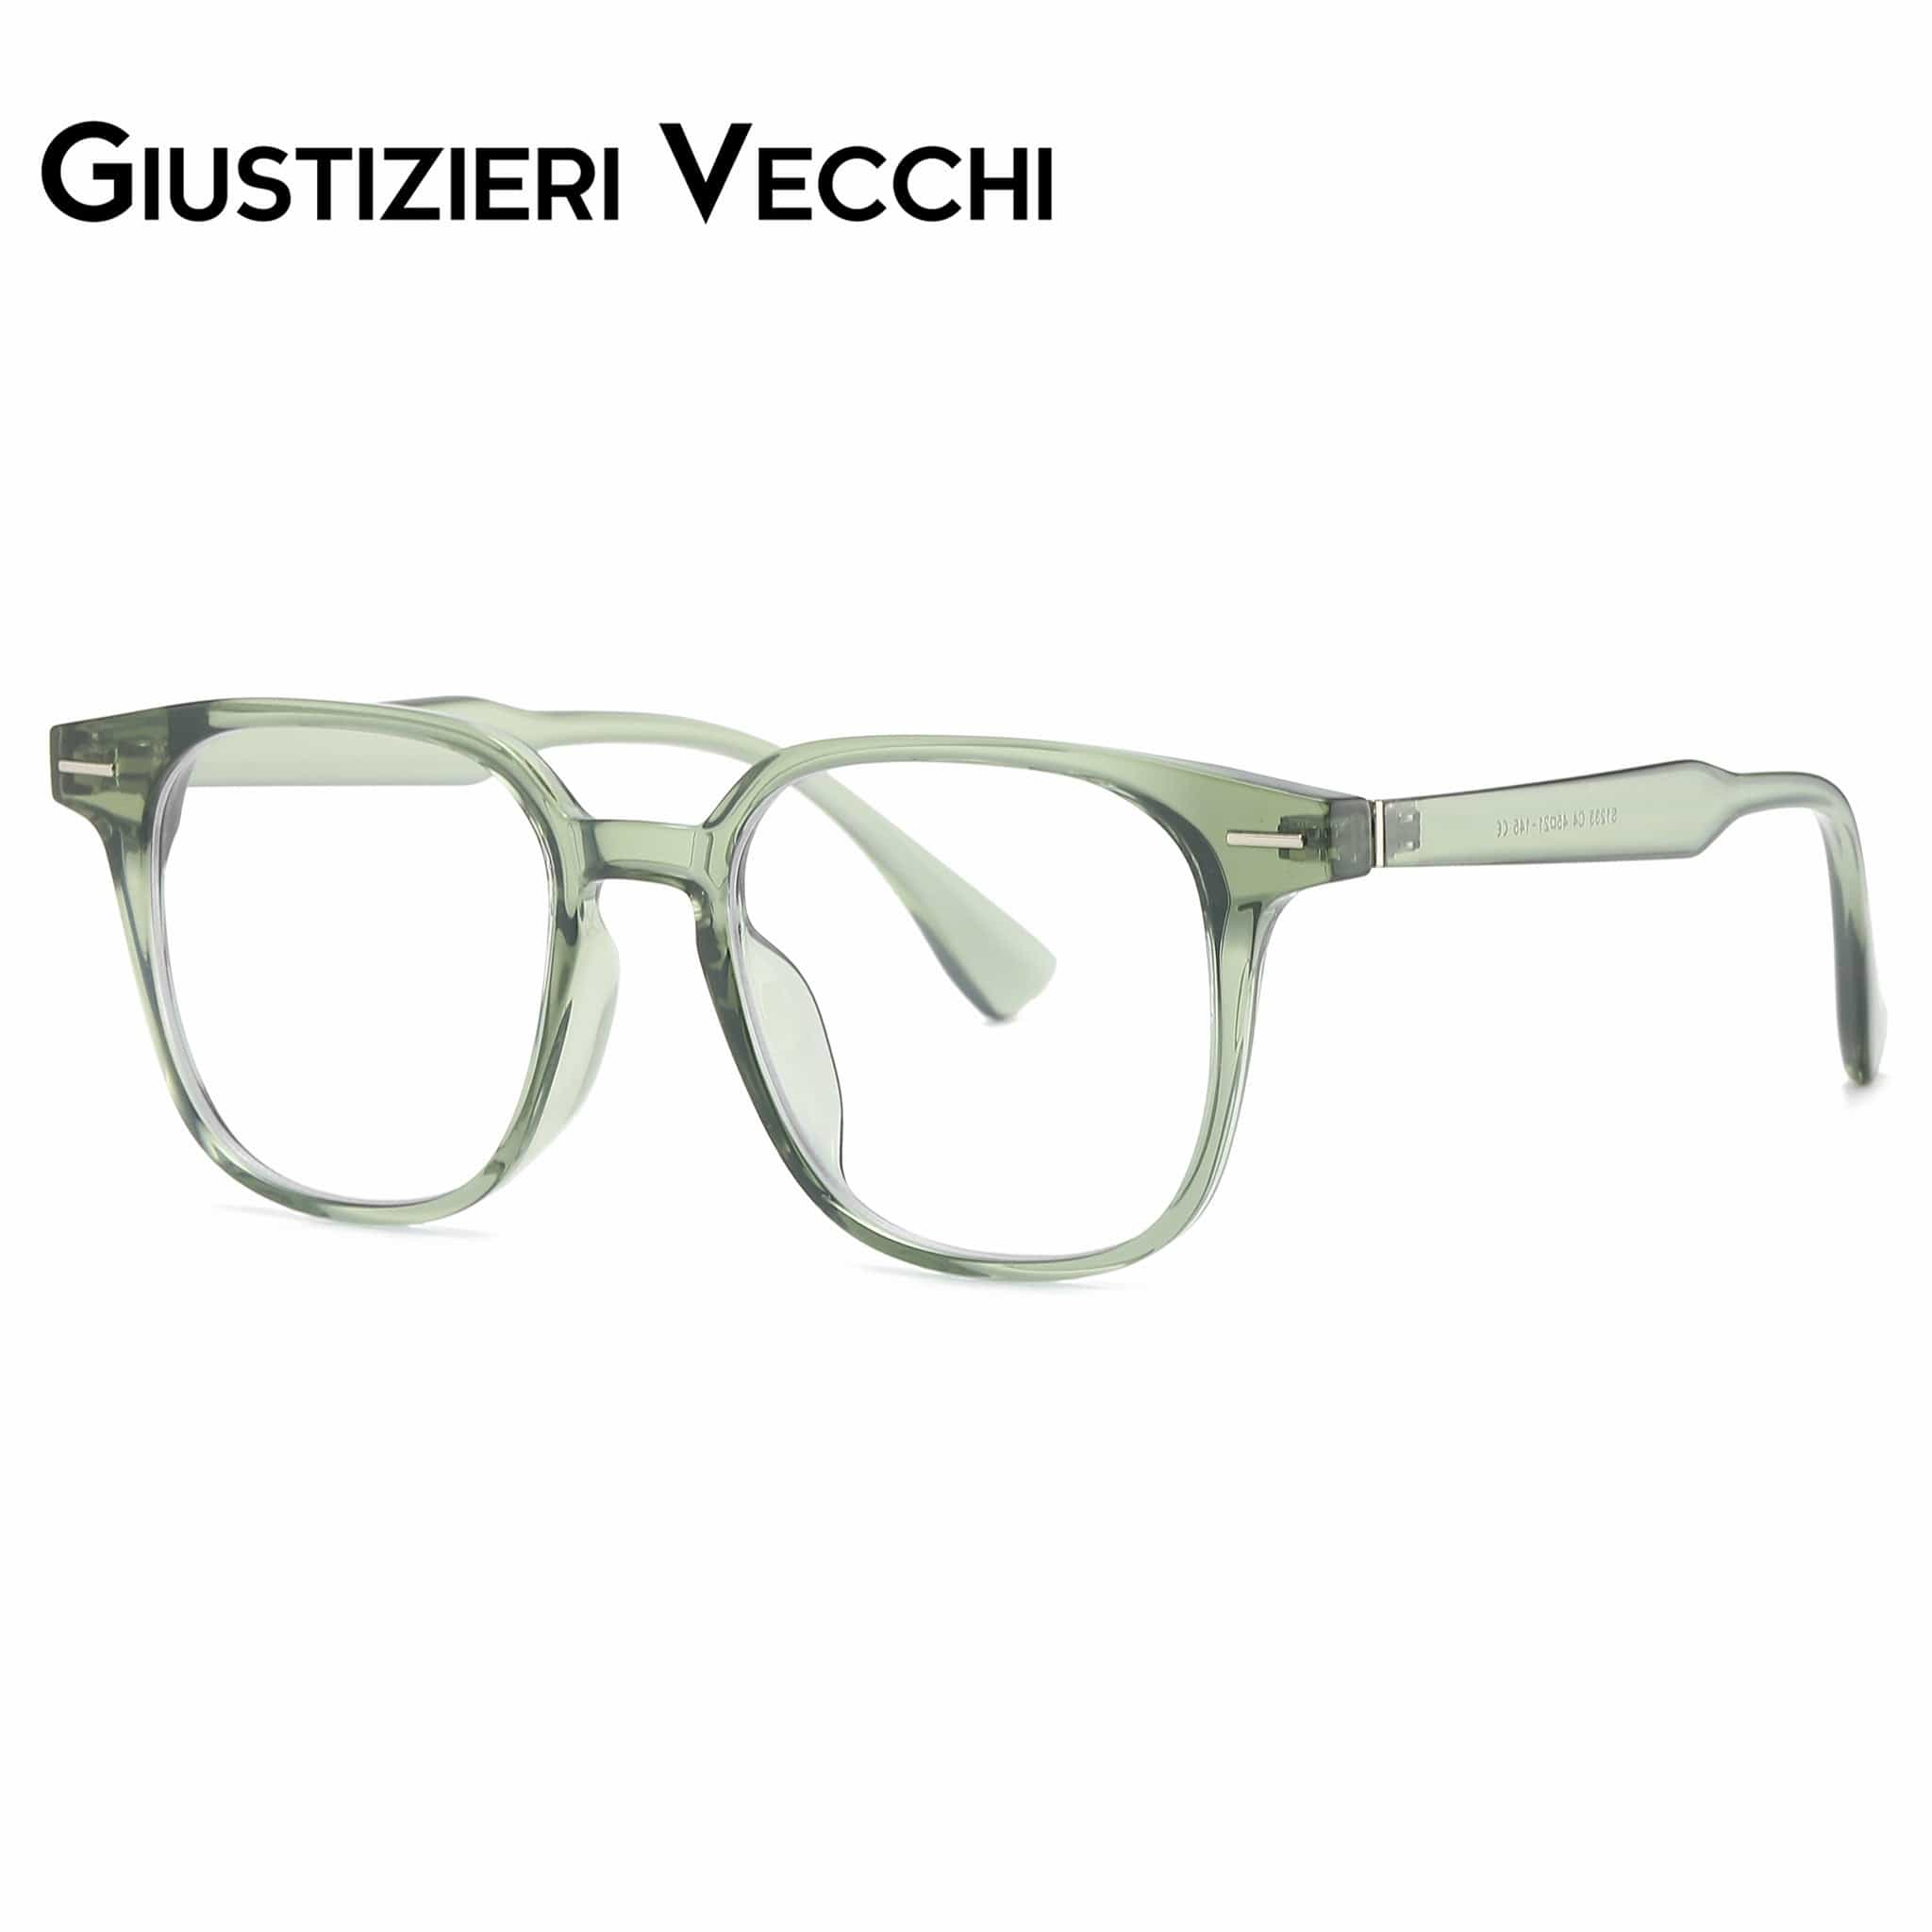 GIUSTIZIERI VECCHI Eyeglasses IceWave Duo